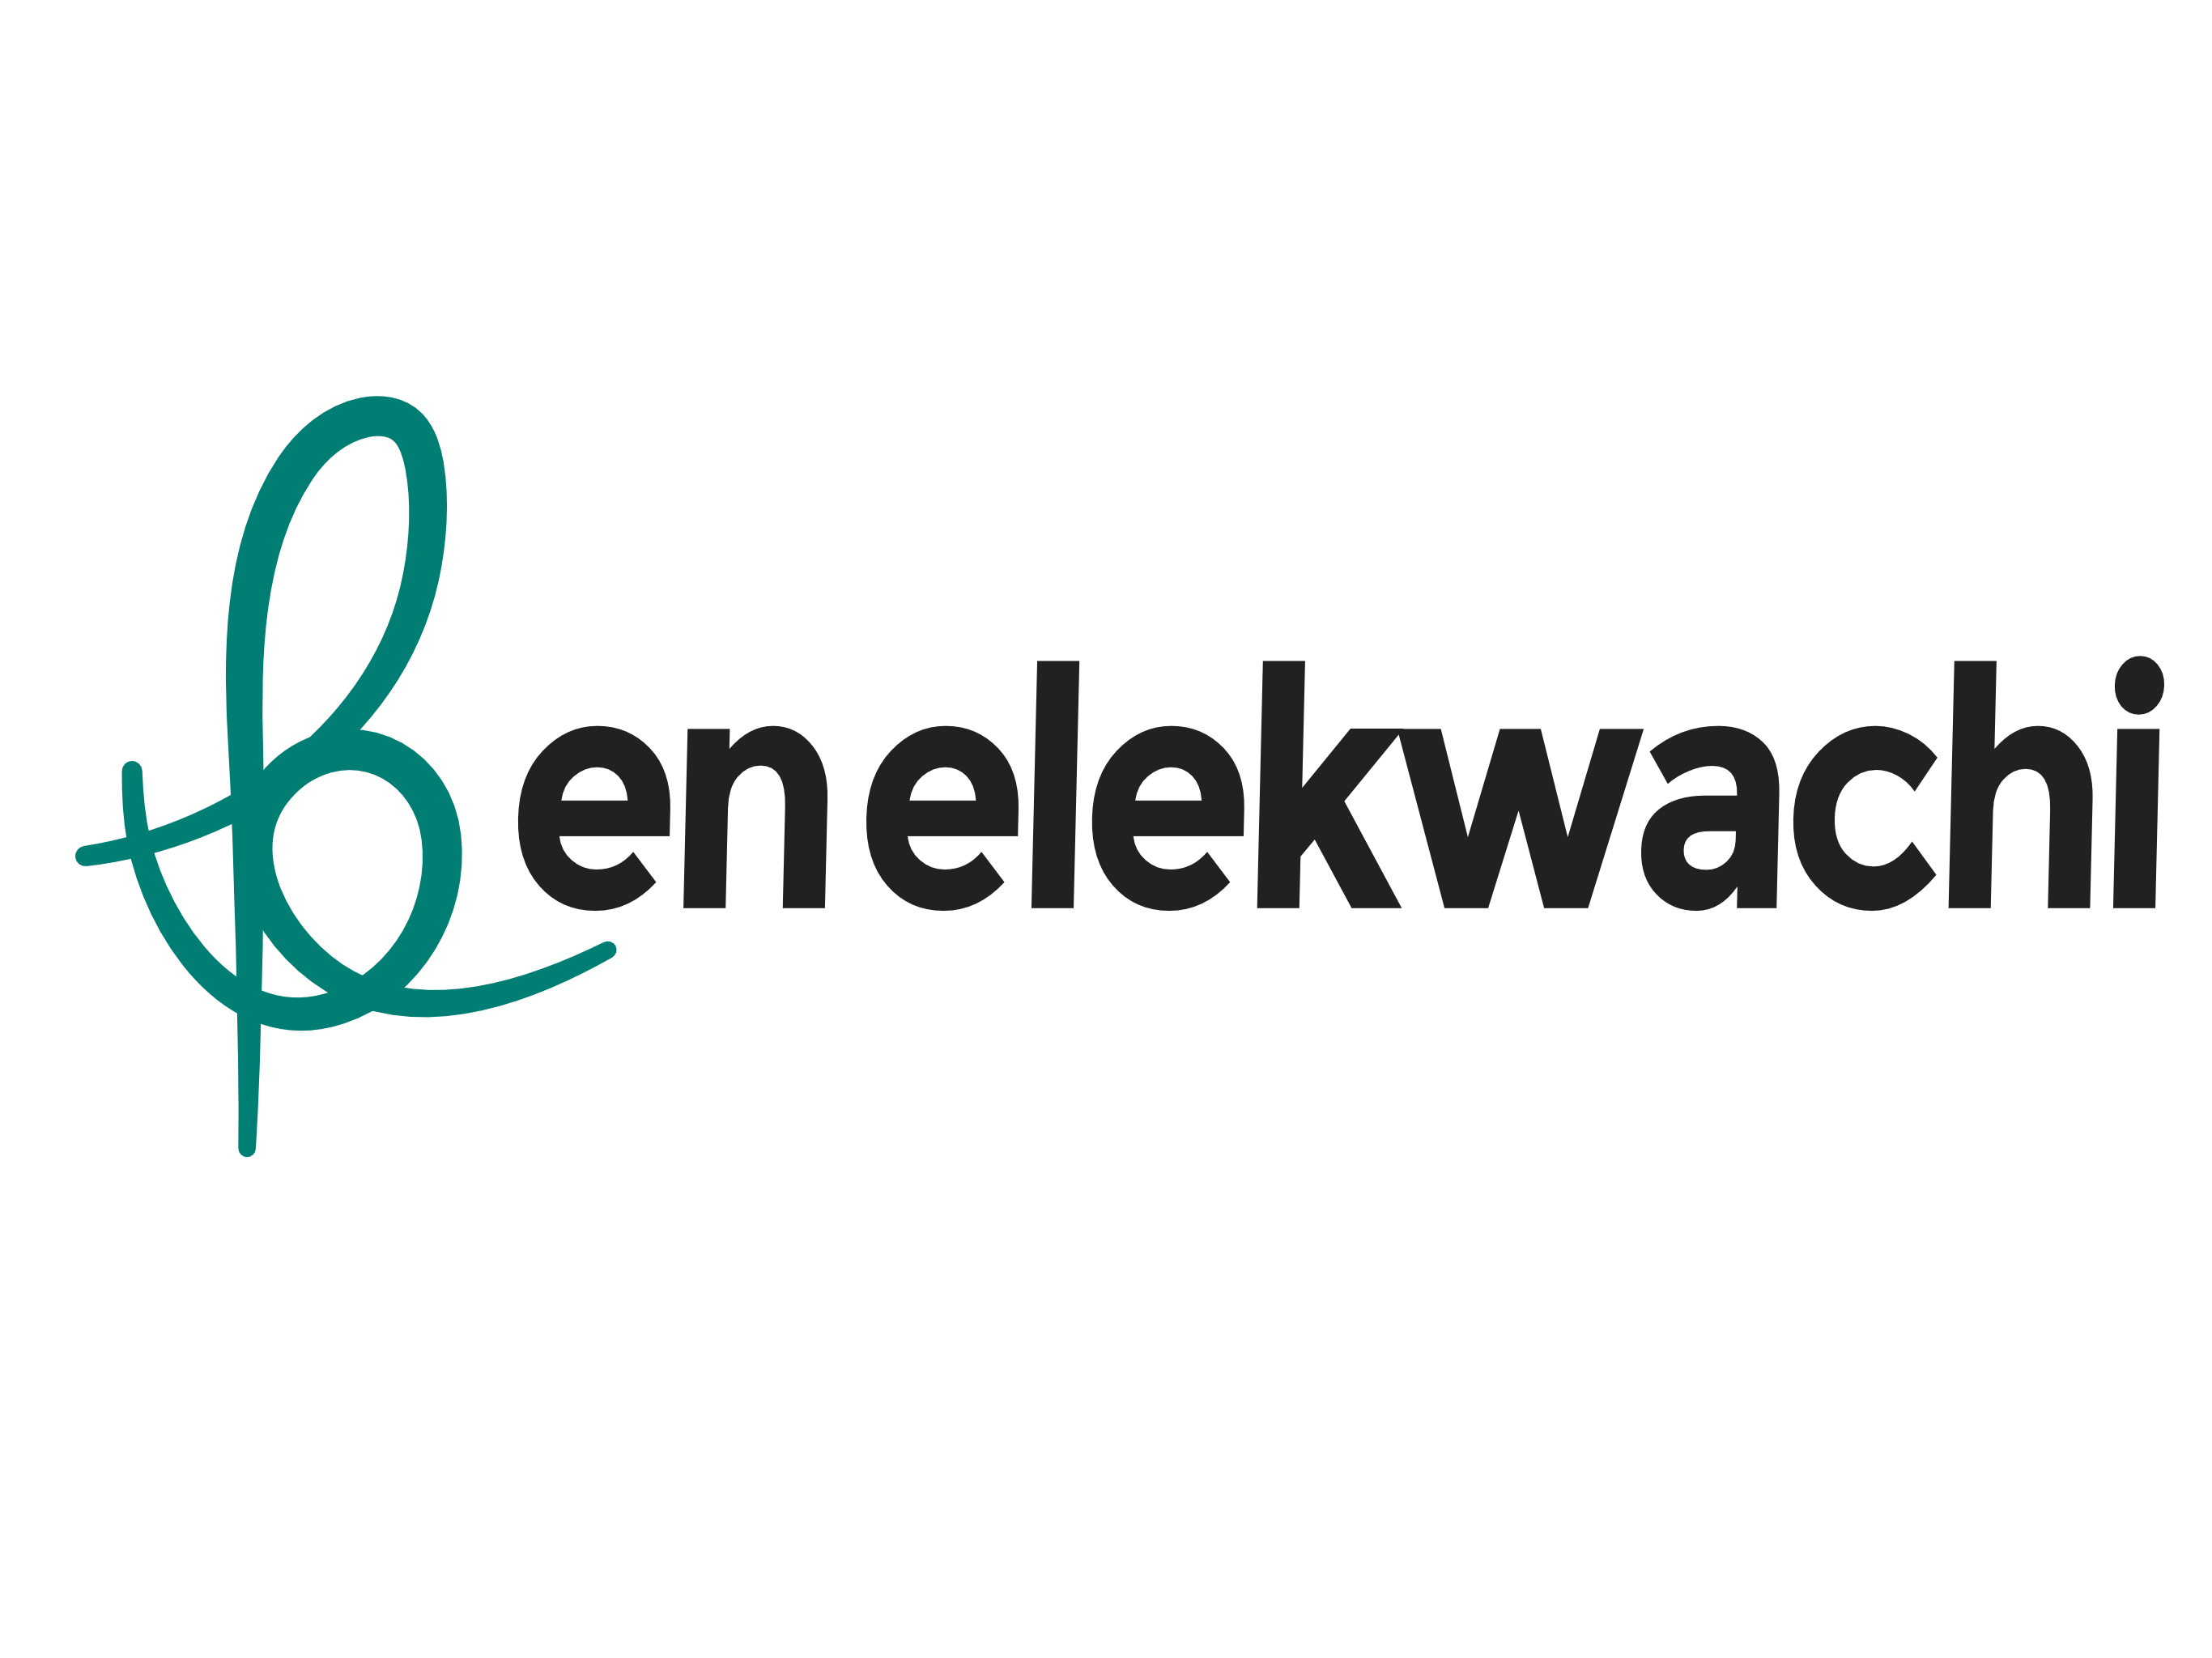 Ben Elekwachi logo